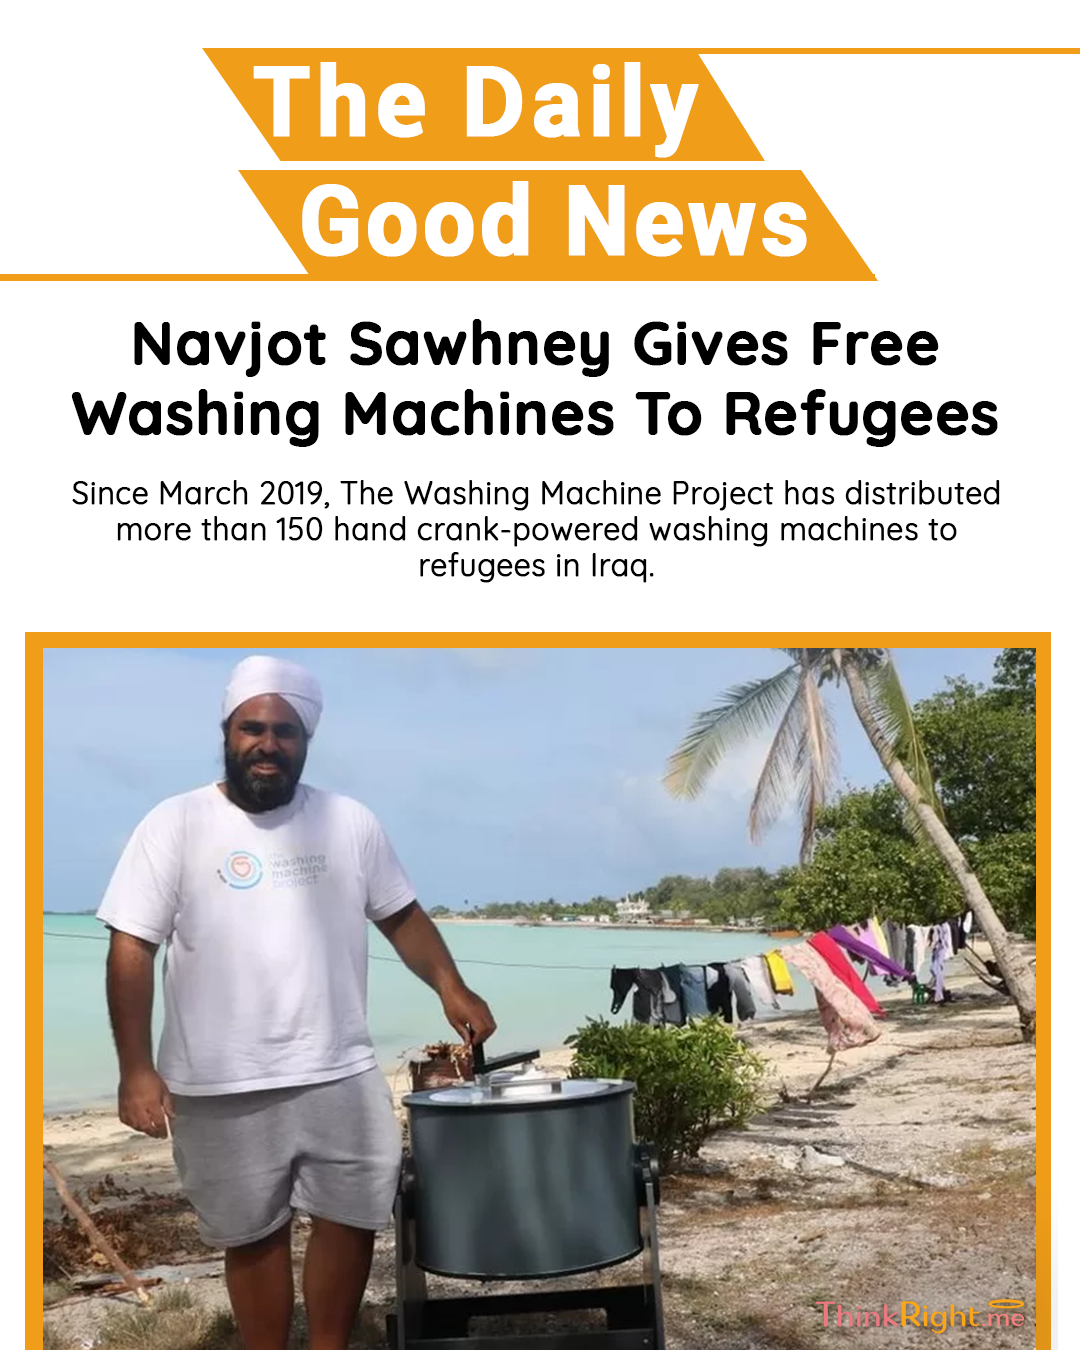 daily good news
navjyot sawhney